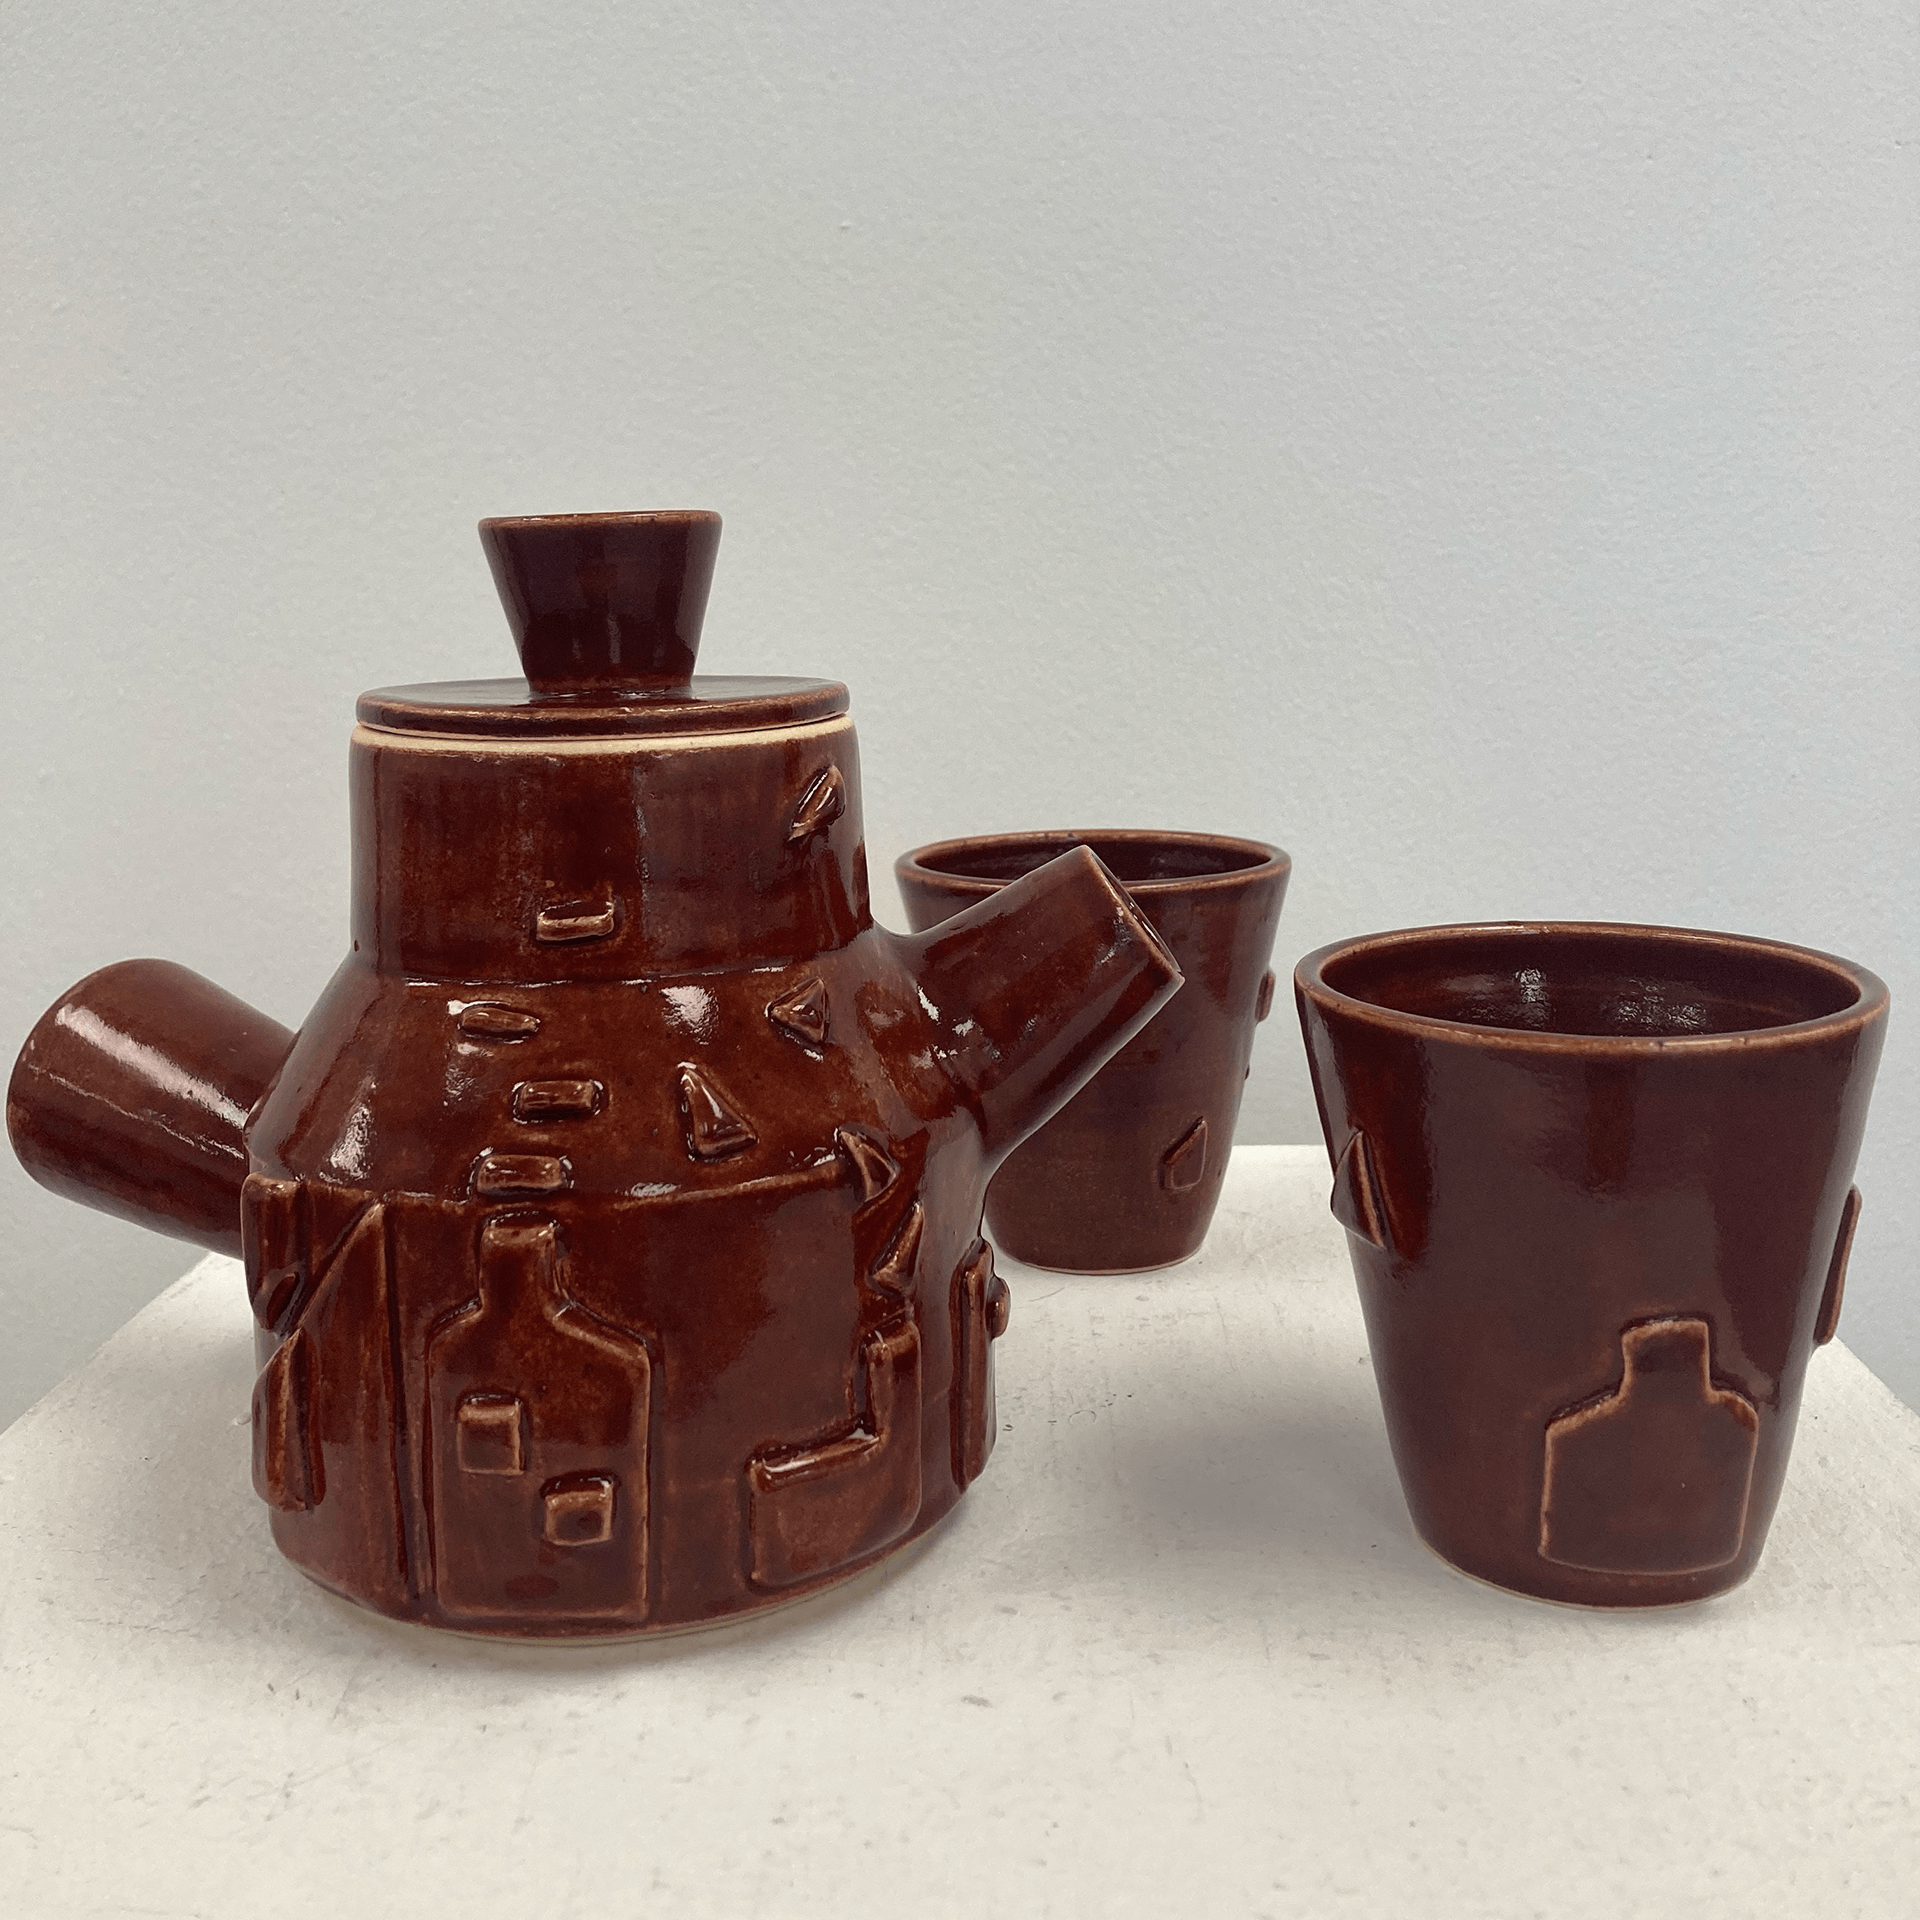 Ceramic set of tableware